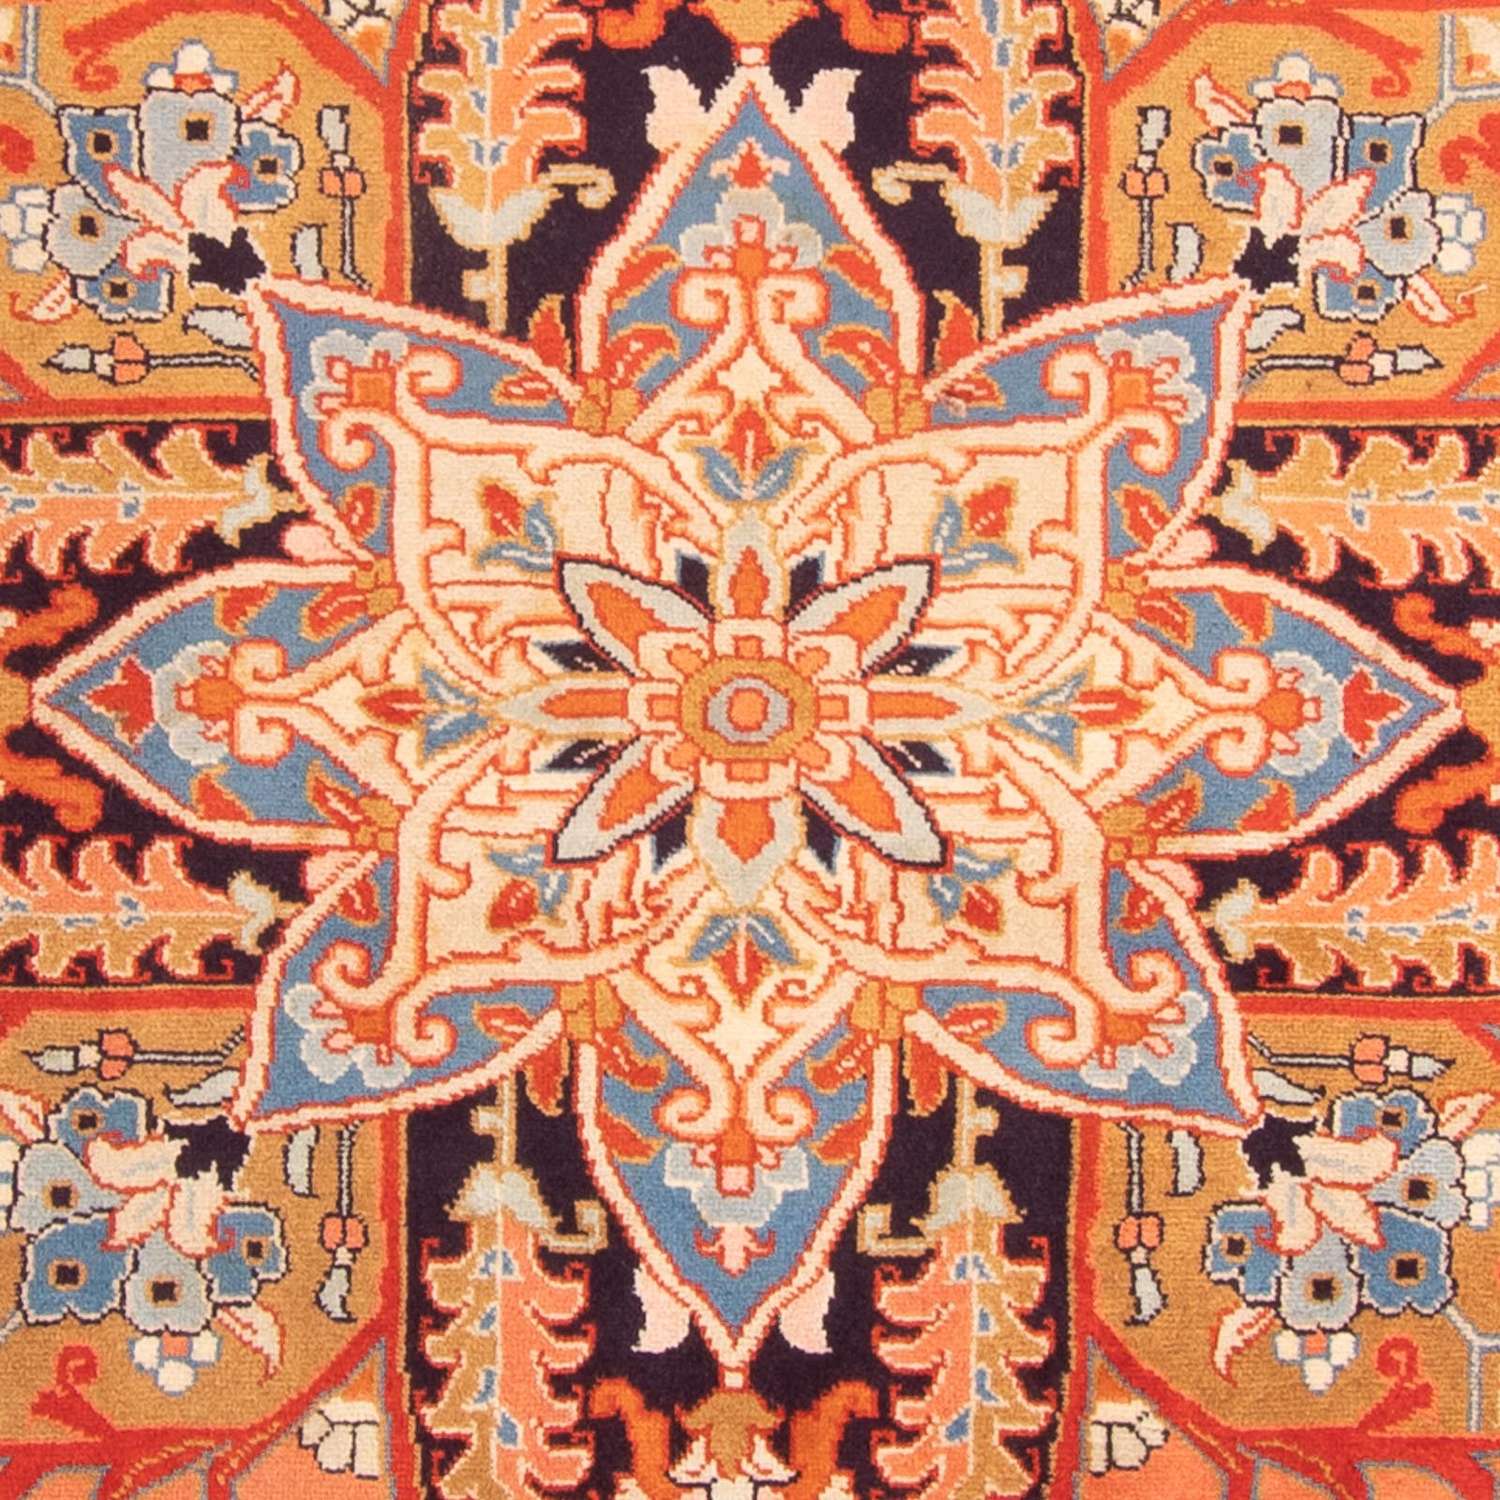 Perzisch tapijt - Tabriz - Royal - 400 x 300 cm - roest